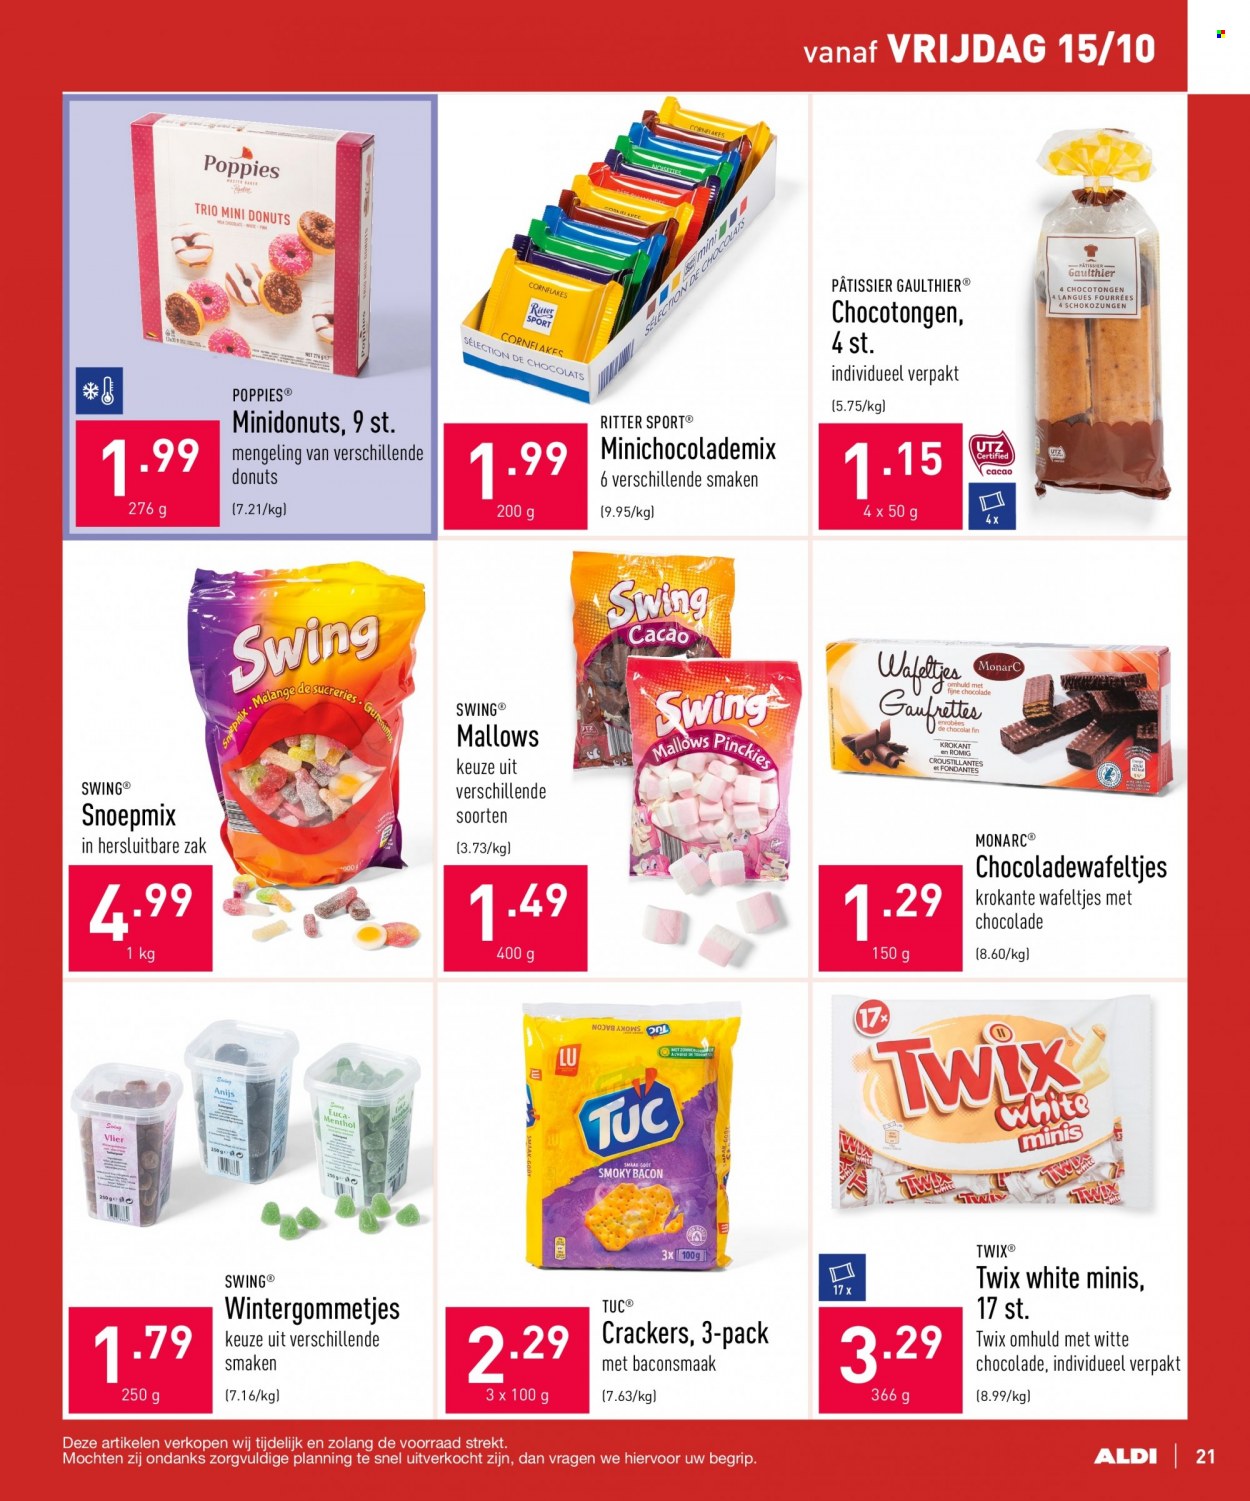 thumbnail - ALDI-aanbieding - 11/10/2021 - 22/10/2021 -  producten in de aanbieding - chocolade, witte chocolade, Ritter Sport, crackers. Pagina 21.